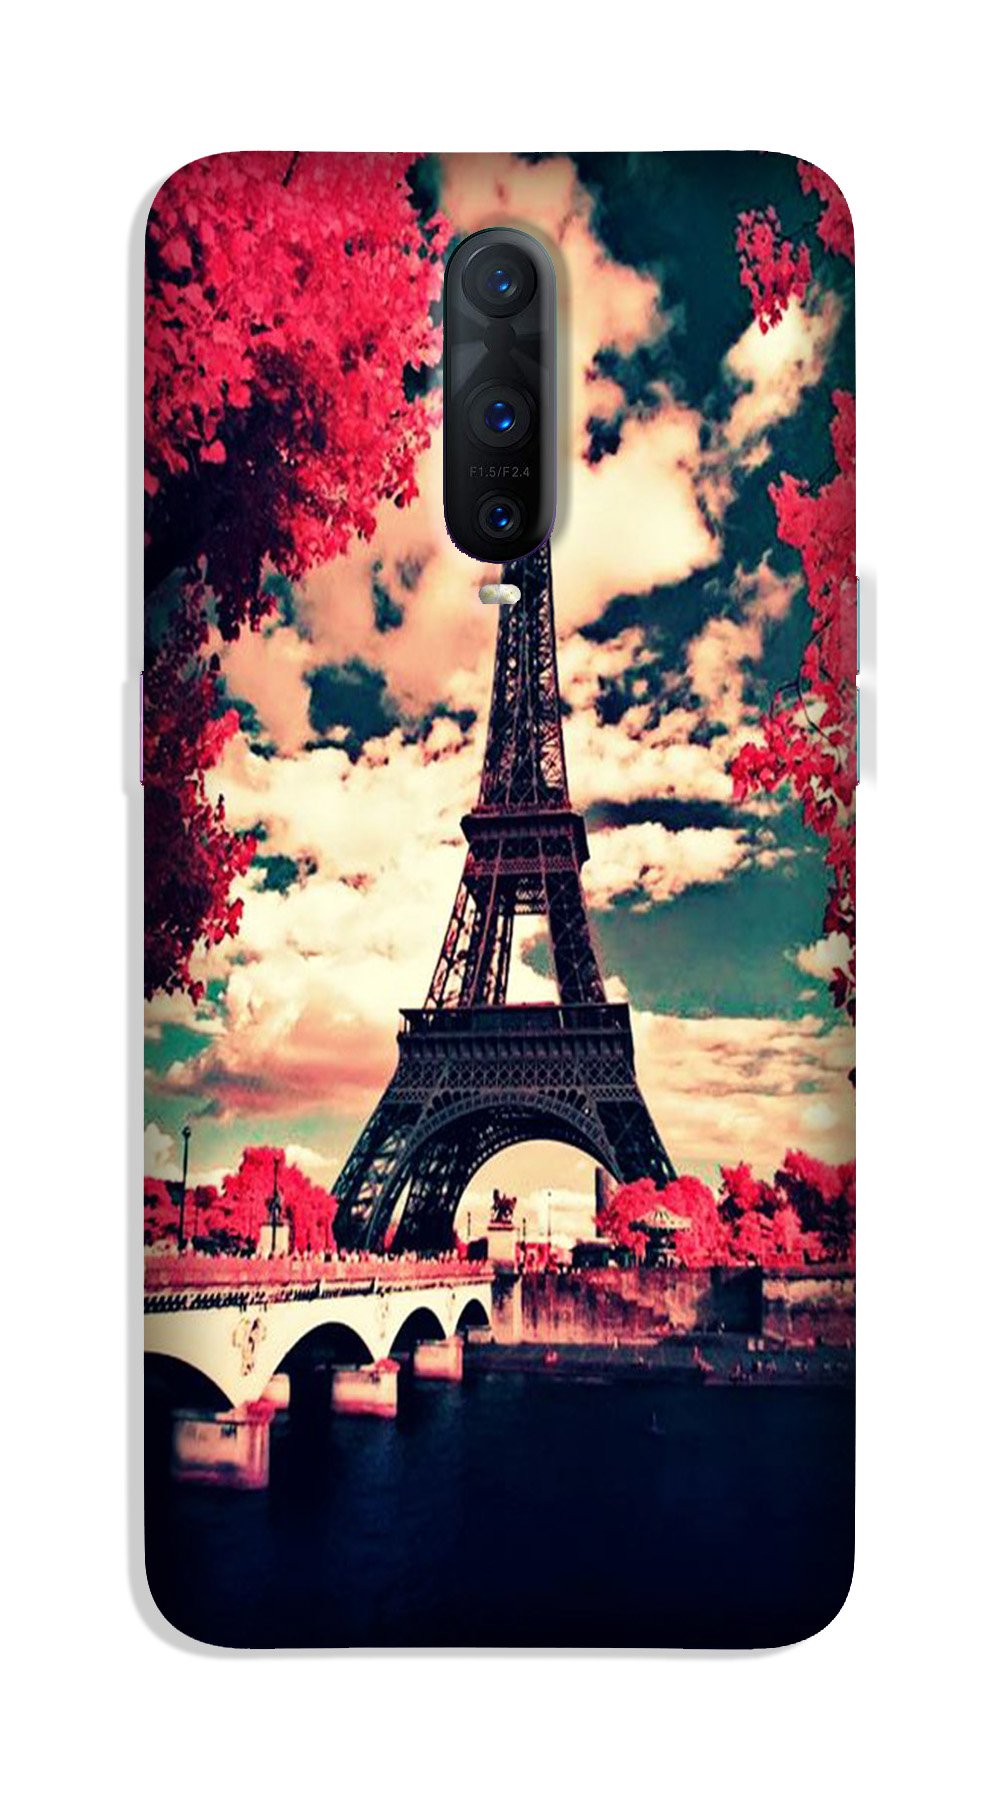 Eiffel Tower Case for OnePlus 7 Pro (Design No. 212)